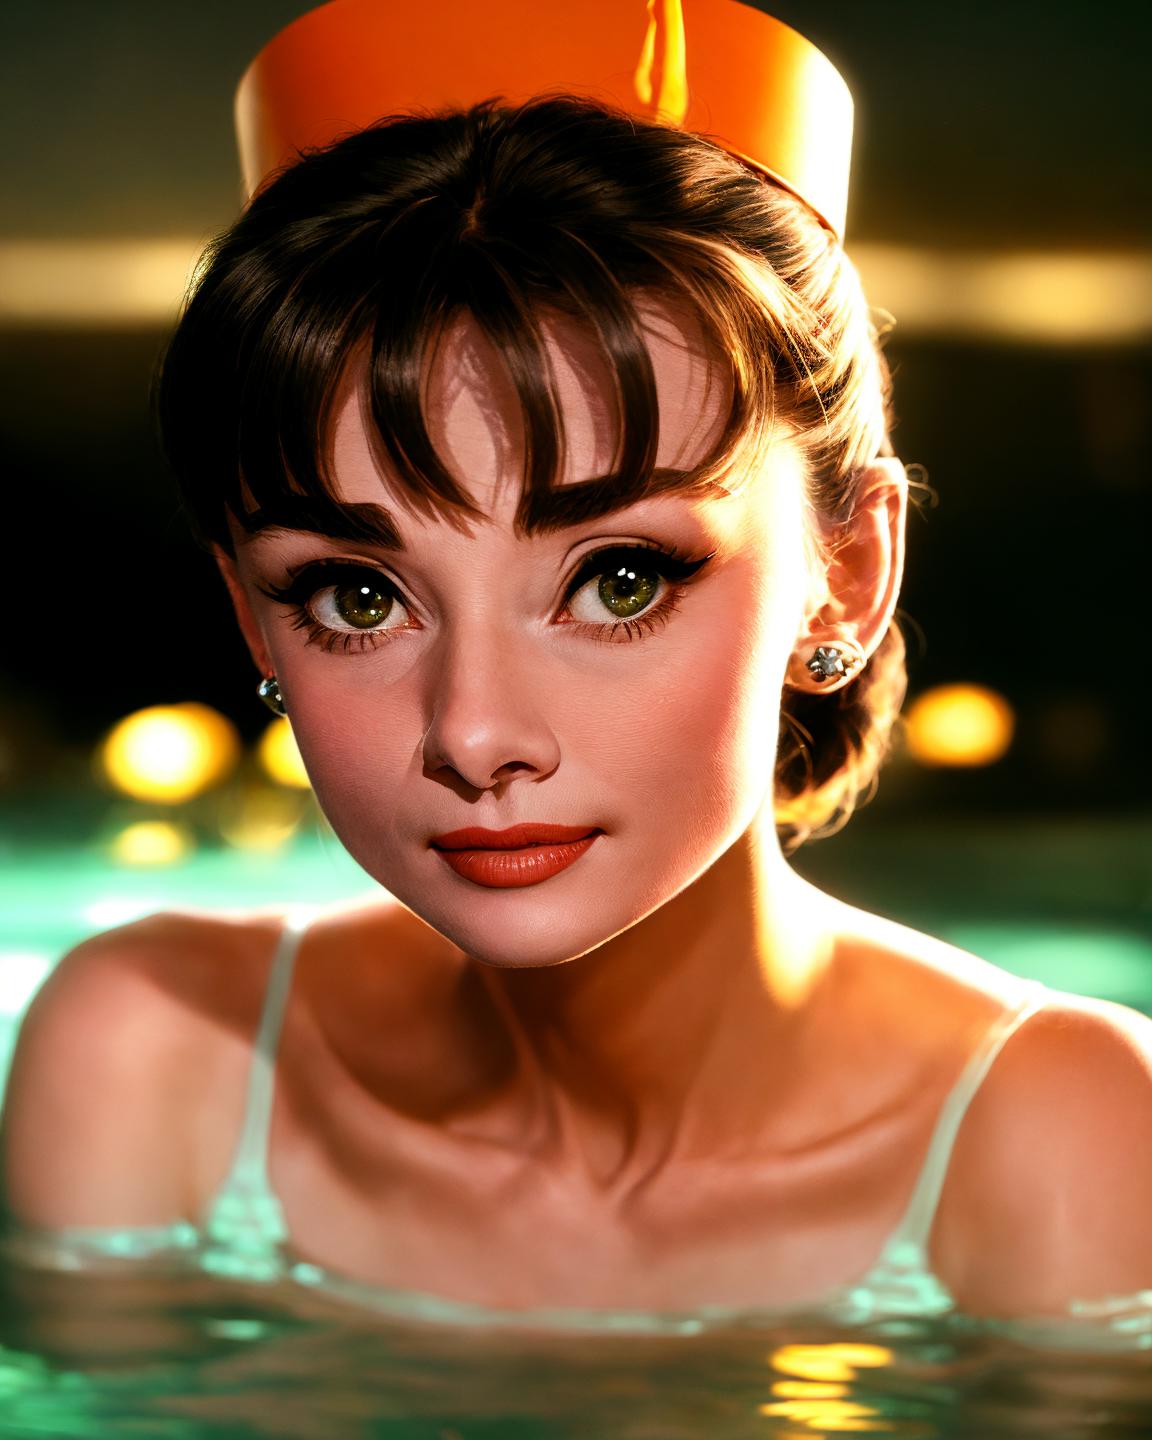 Audrey Hepburn image by MrHong